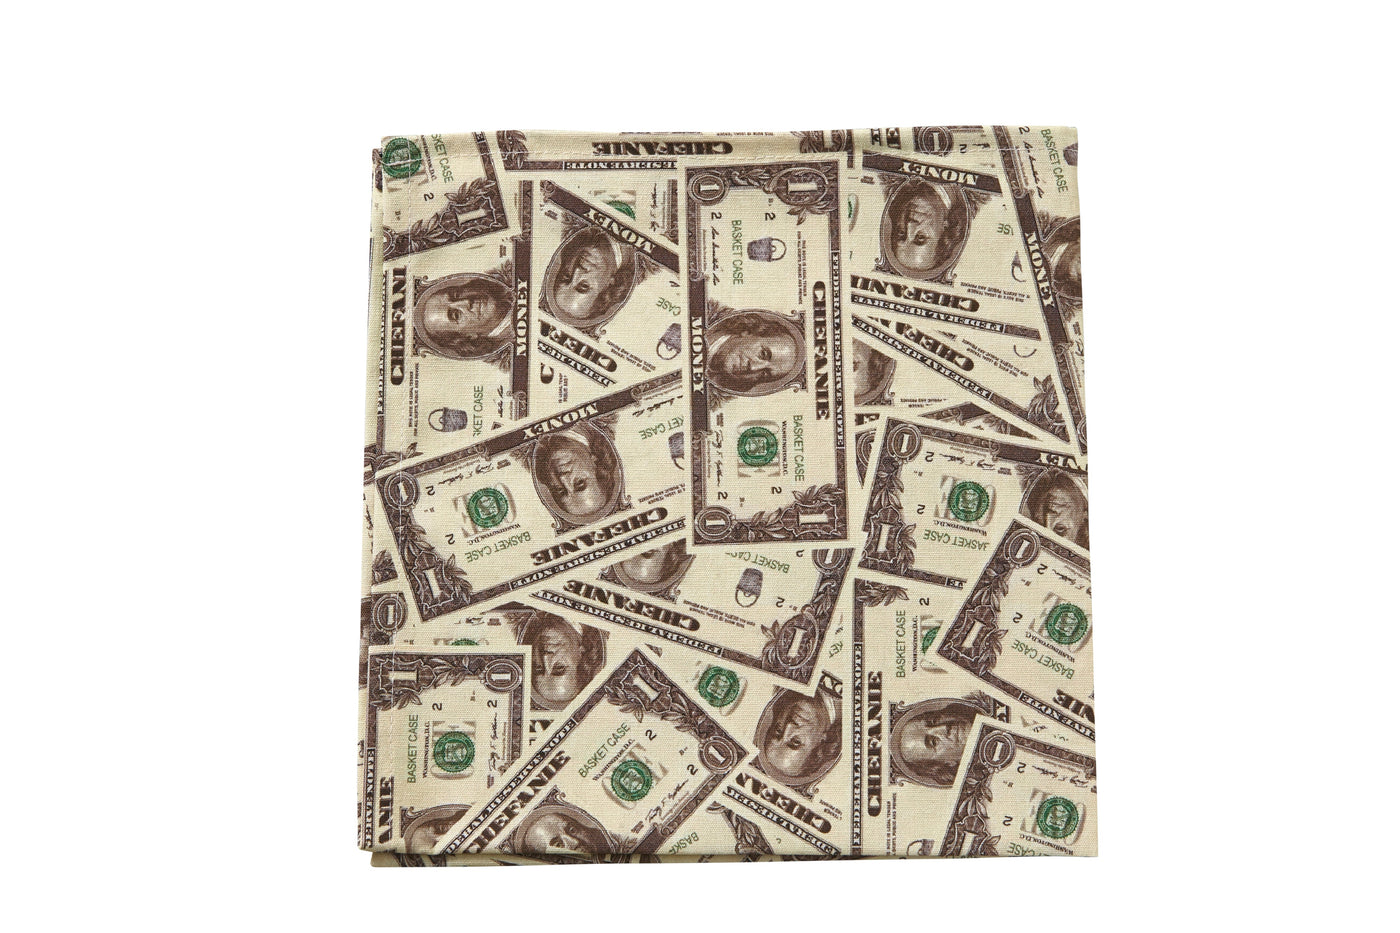 Money Napkins (4) Money Chefanie 